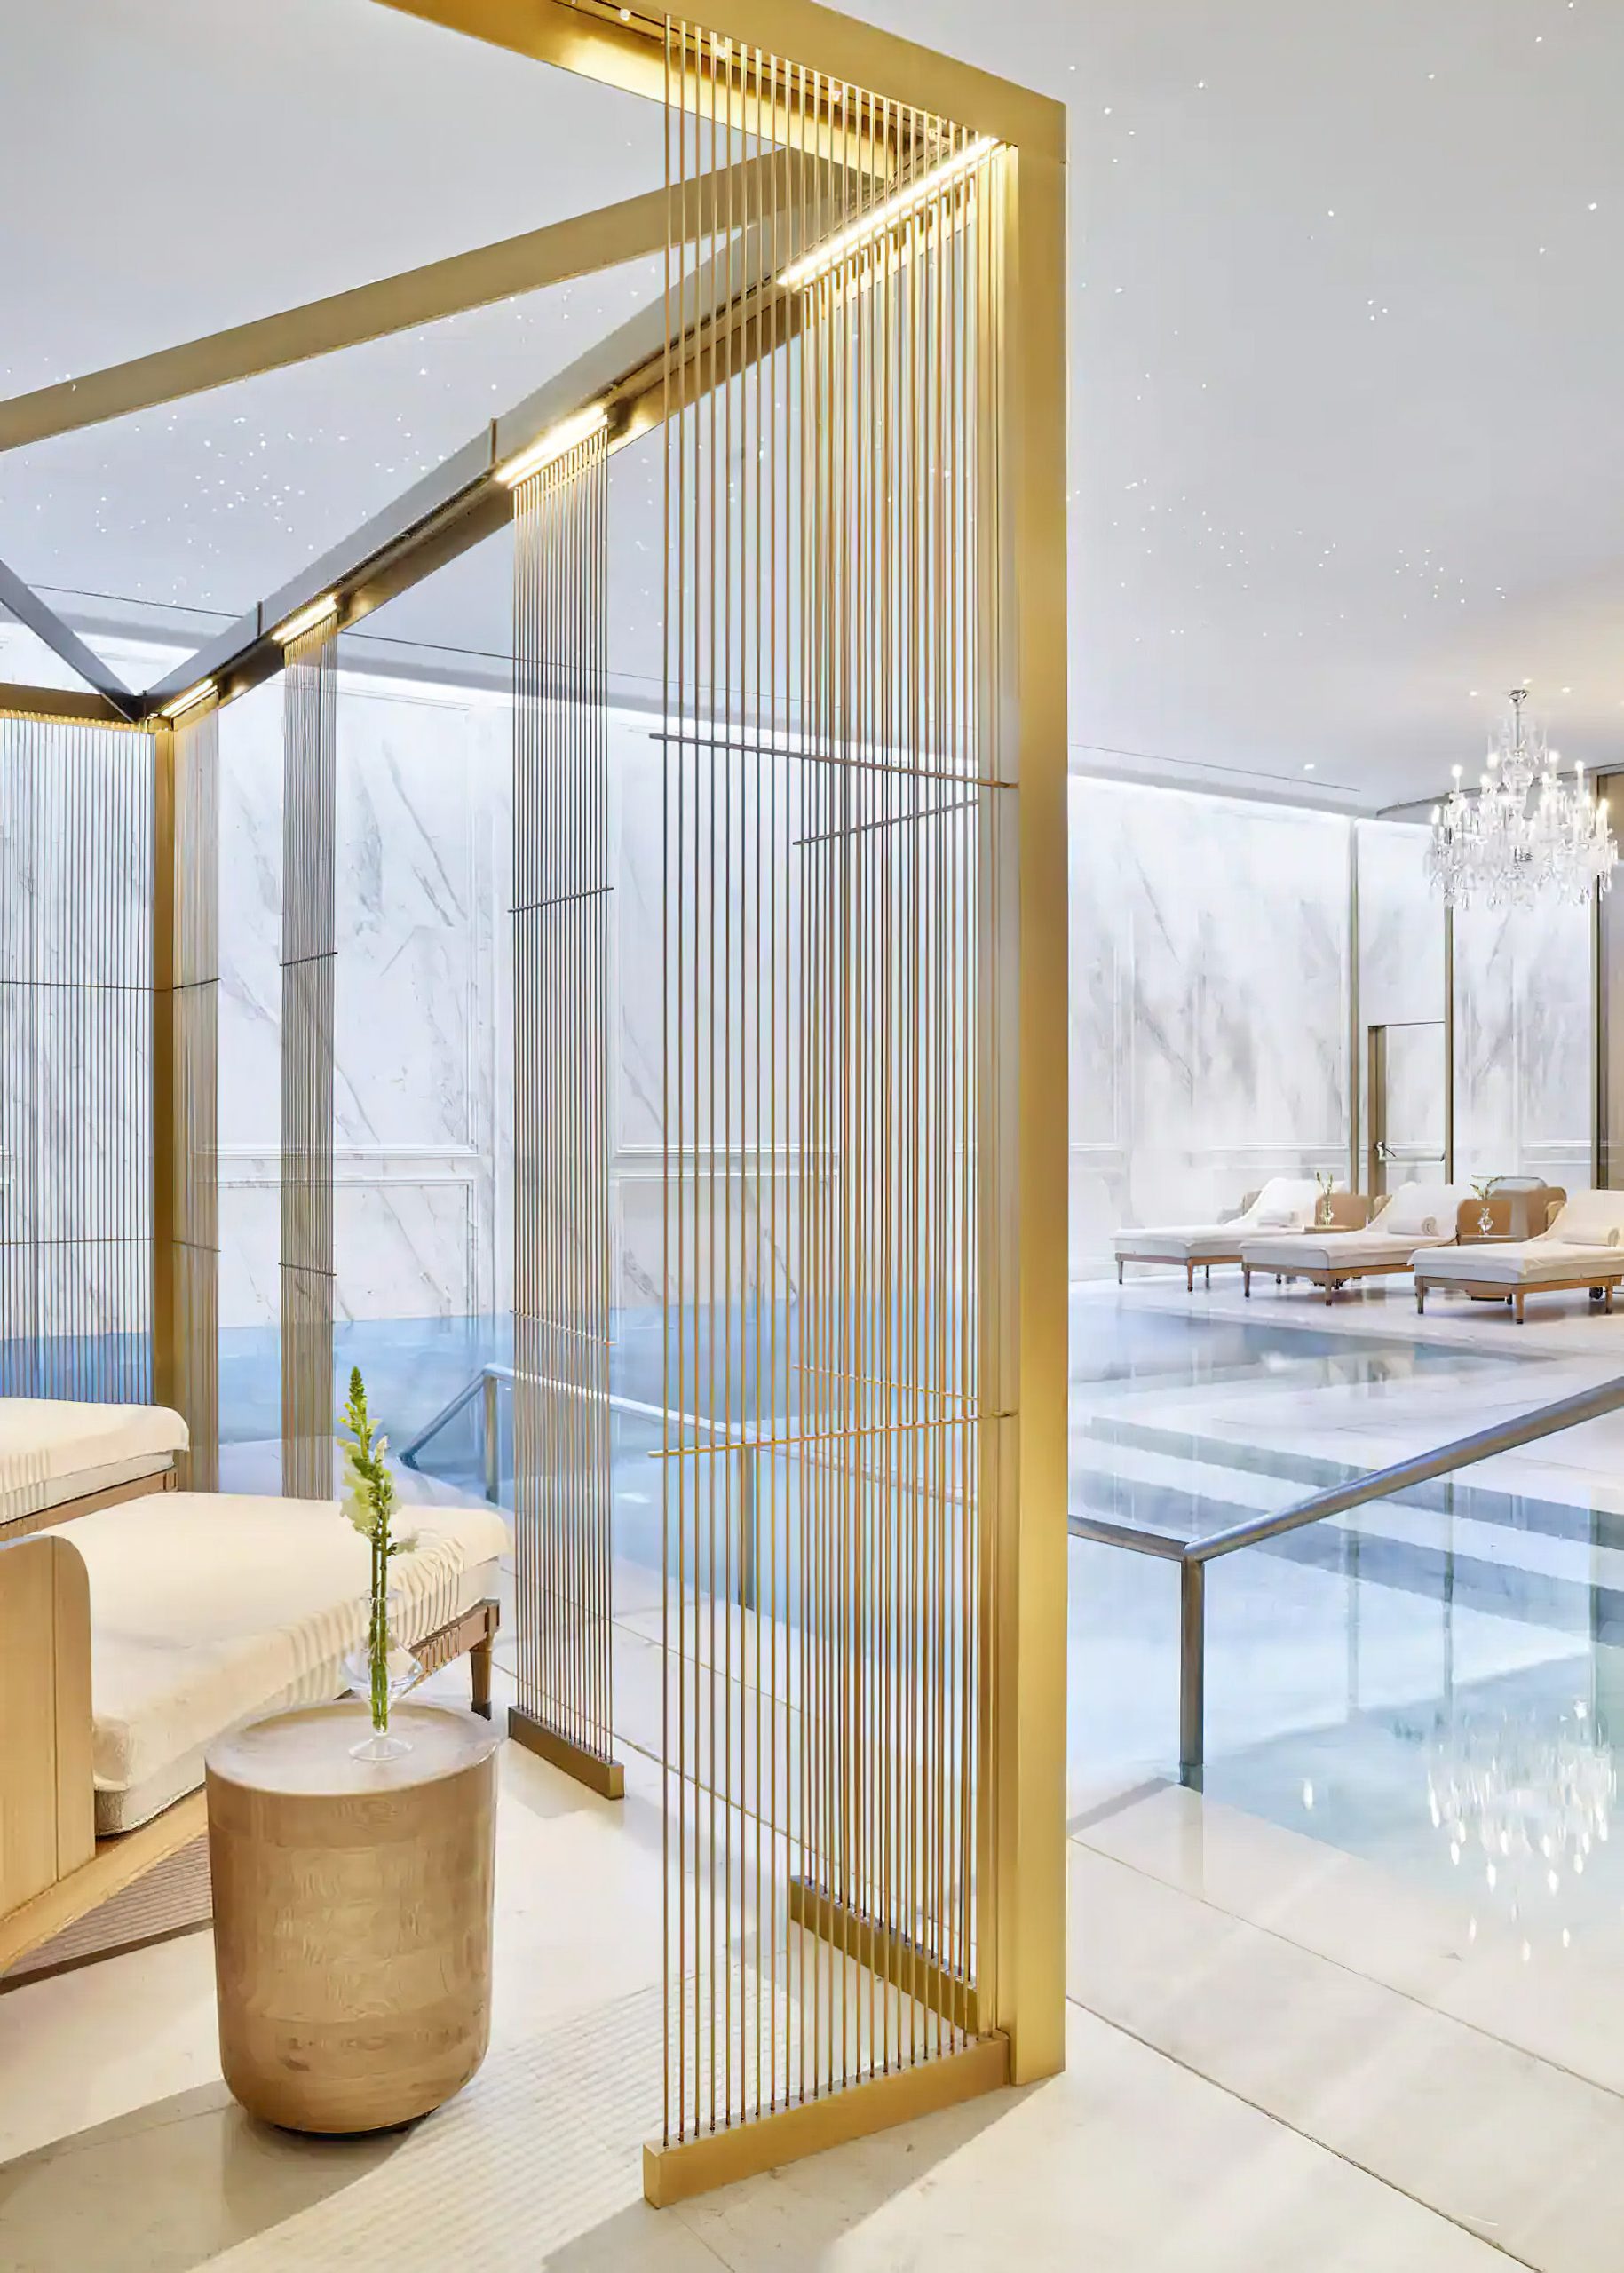 Mandarin Oriental Ritz, Madrid Hotel - Madrid, Spain - Spa Pool